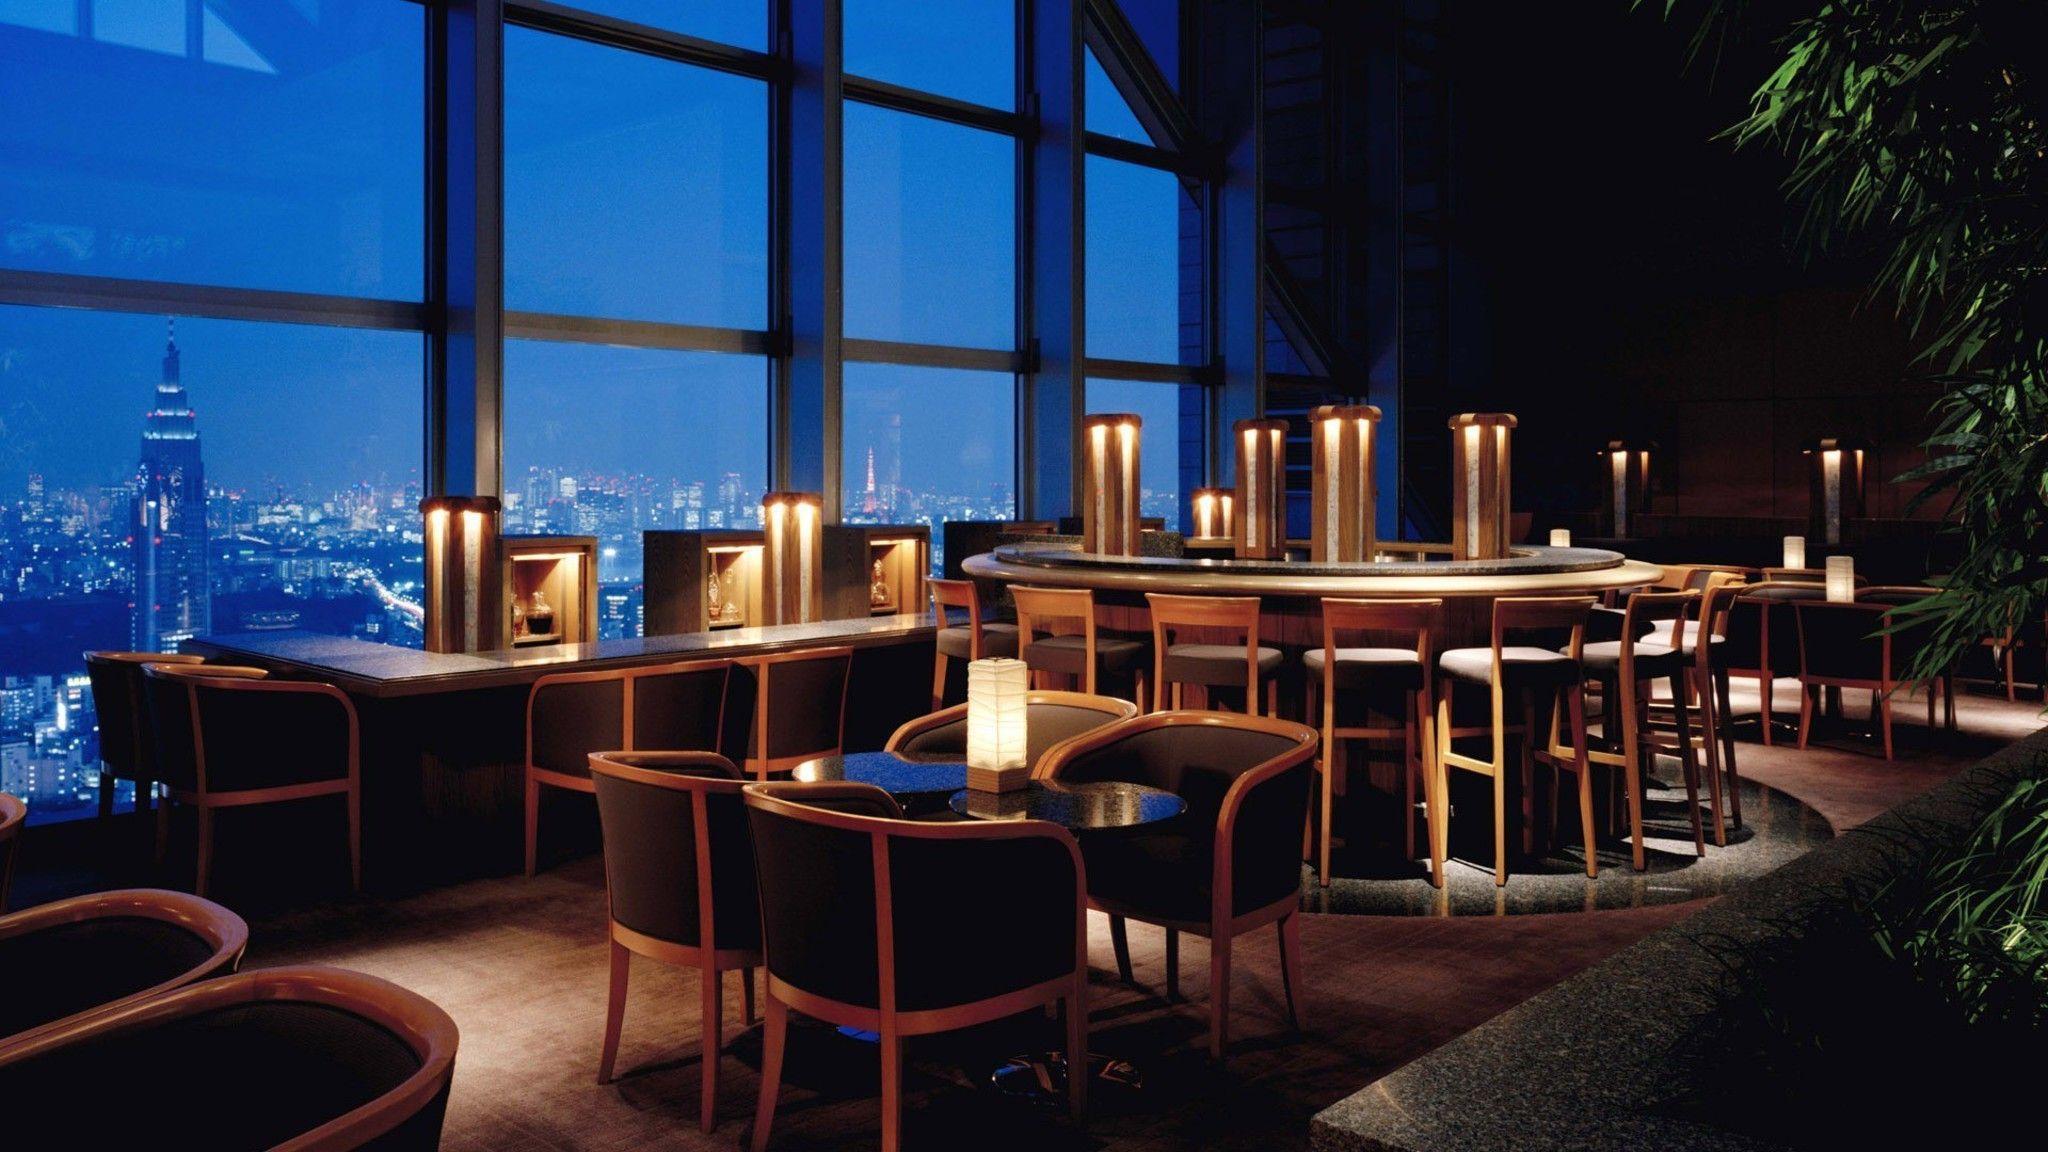 Bar lounge in a skyscraper wallpaper. PC